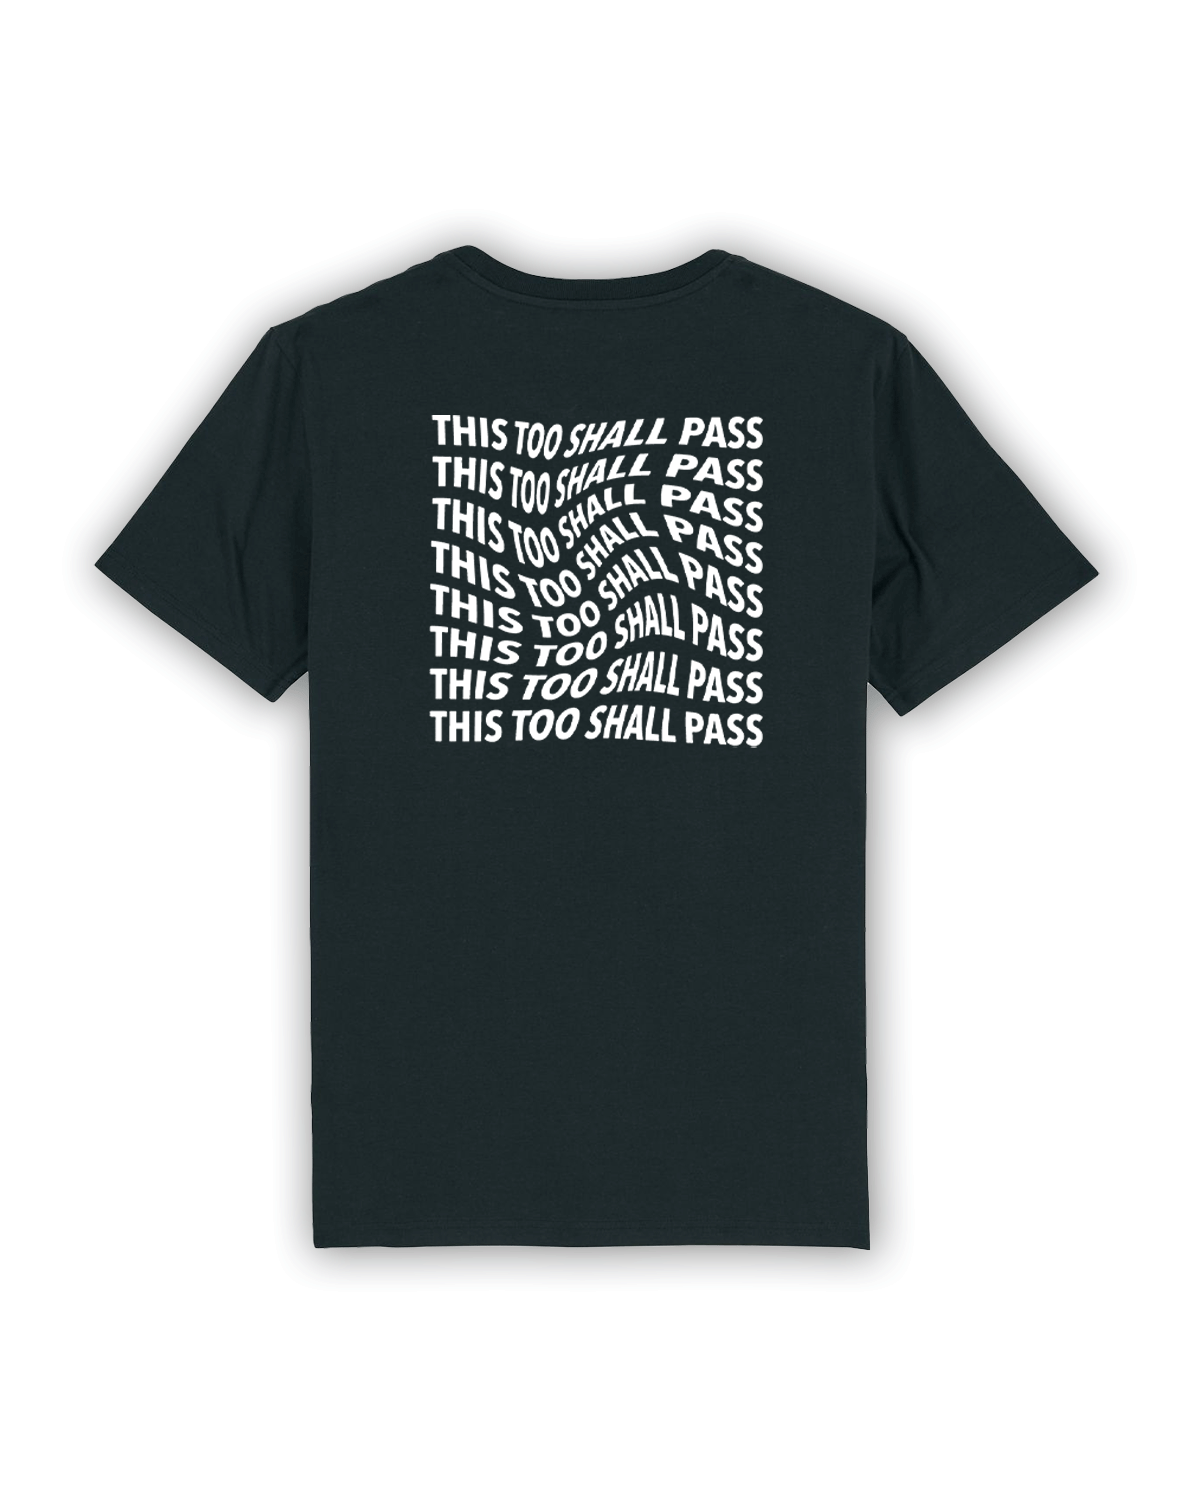 T-Shirt "This too shall pass" schwarz/weiß